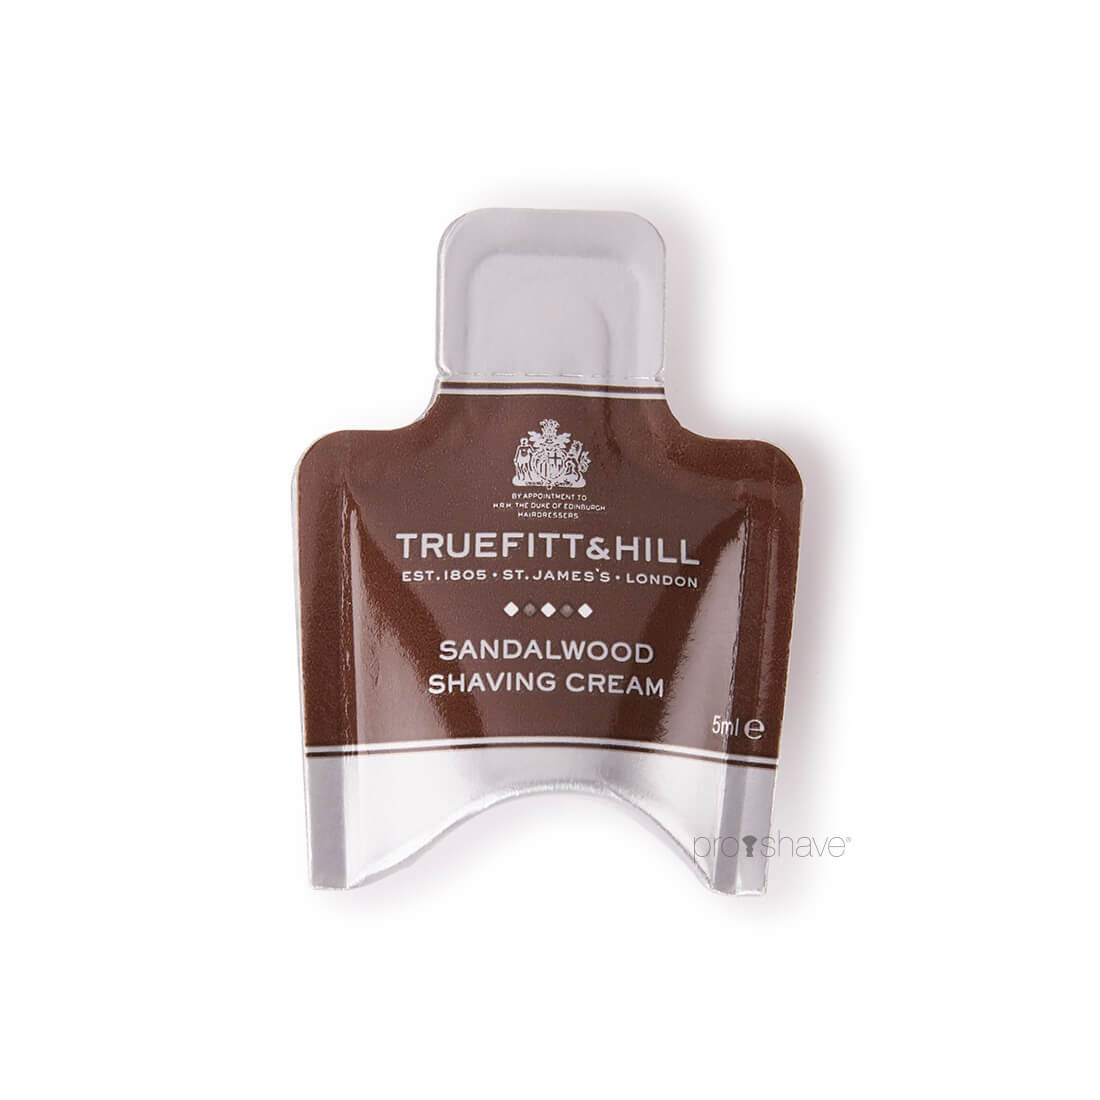 Billede af Truefitt & Hill Sandalwood Shaving Cream Sample Pack, 5 ml.